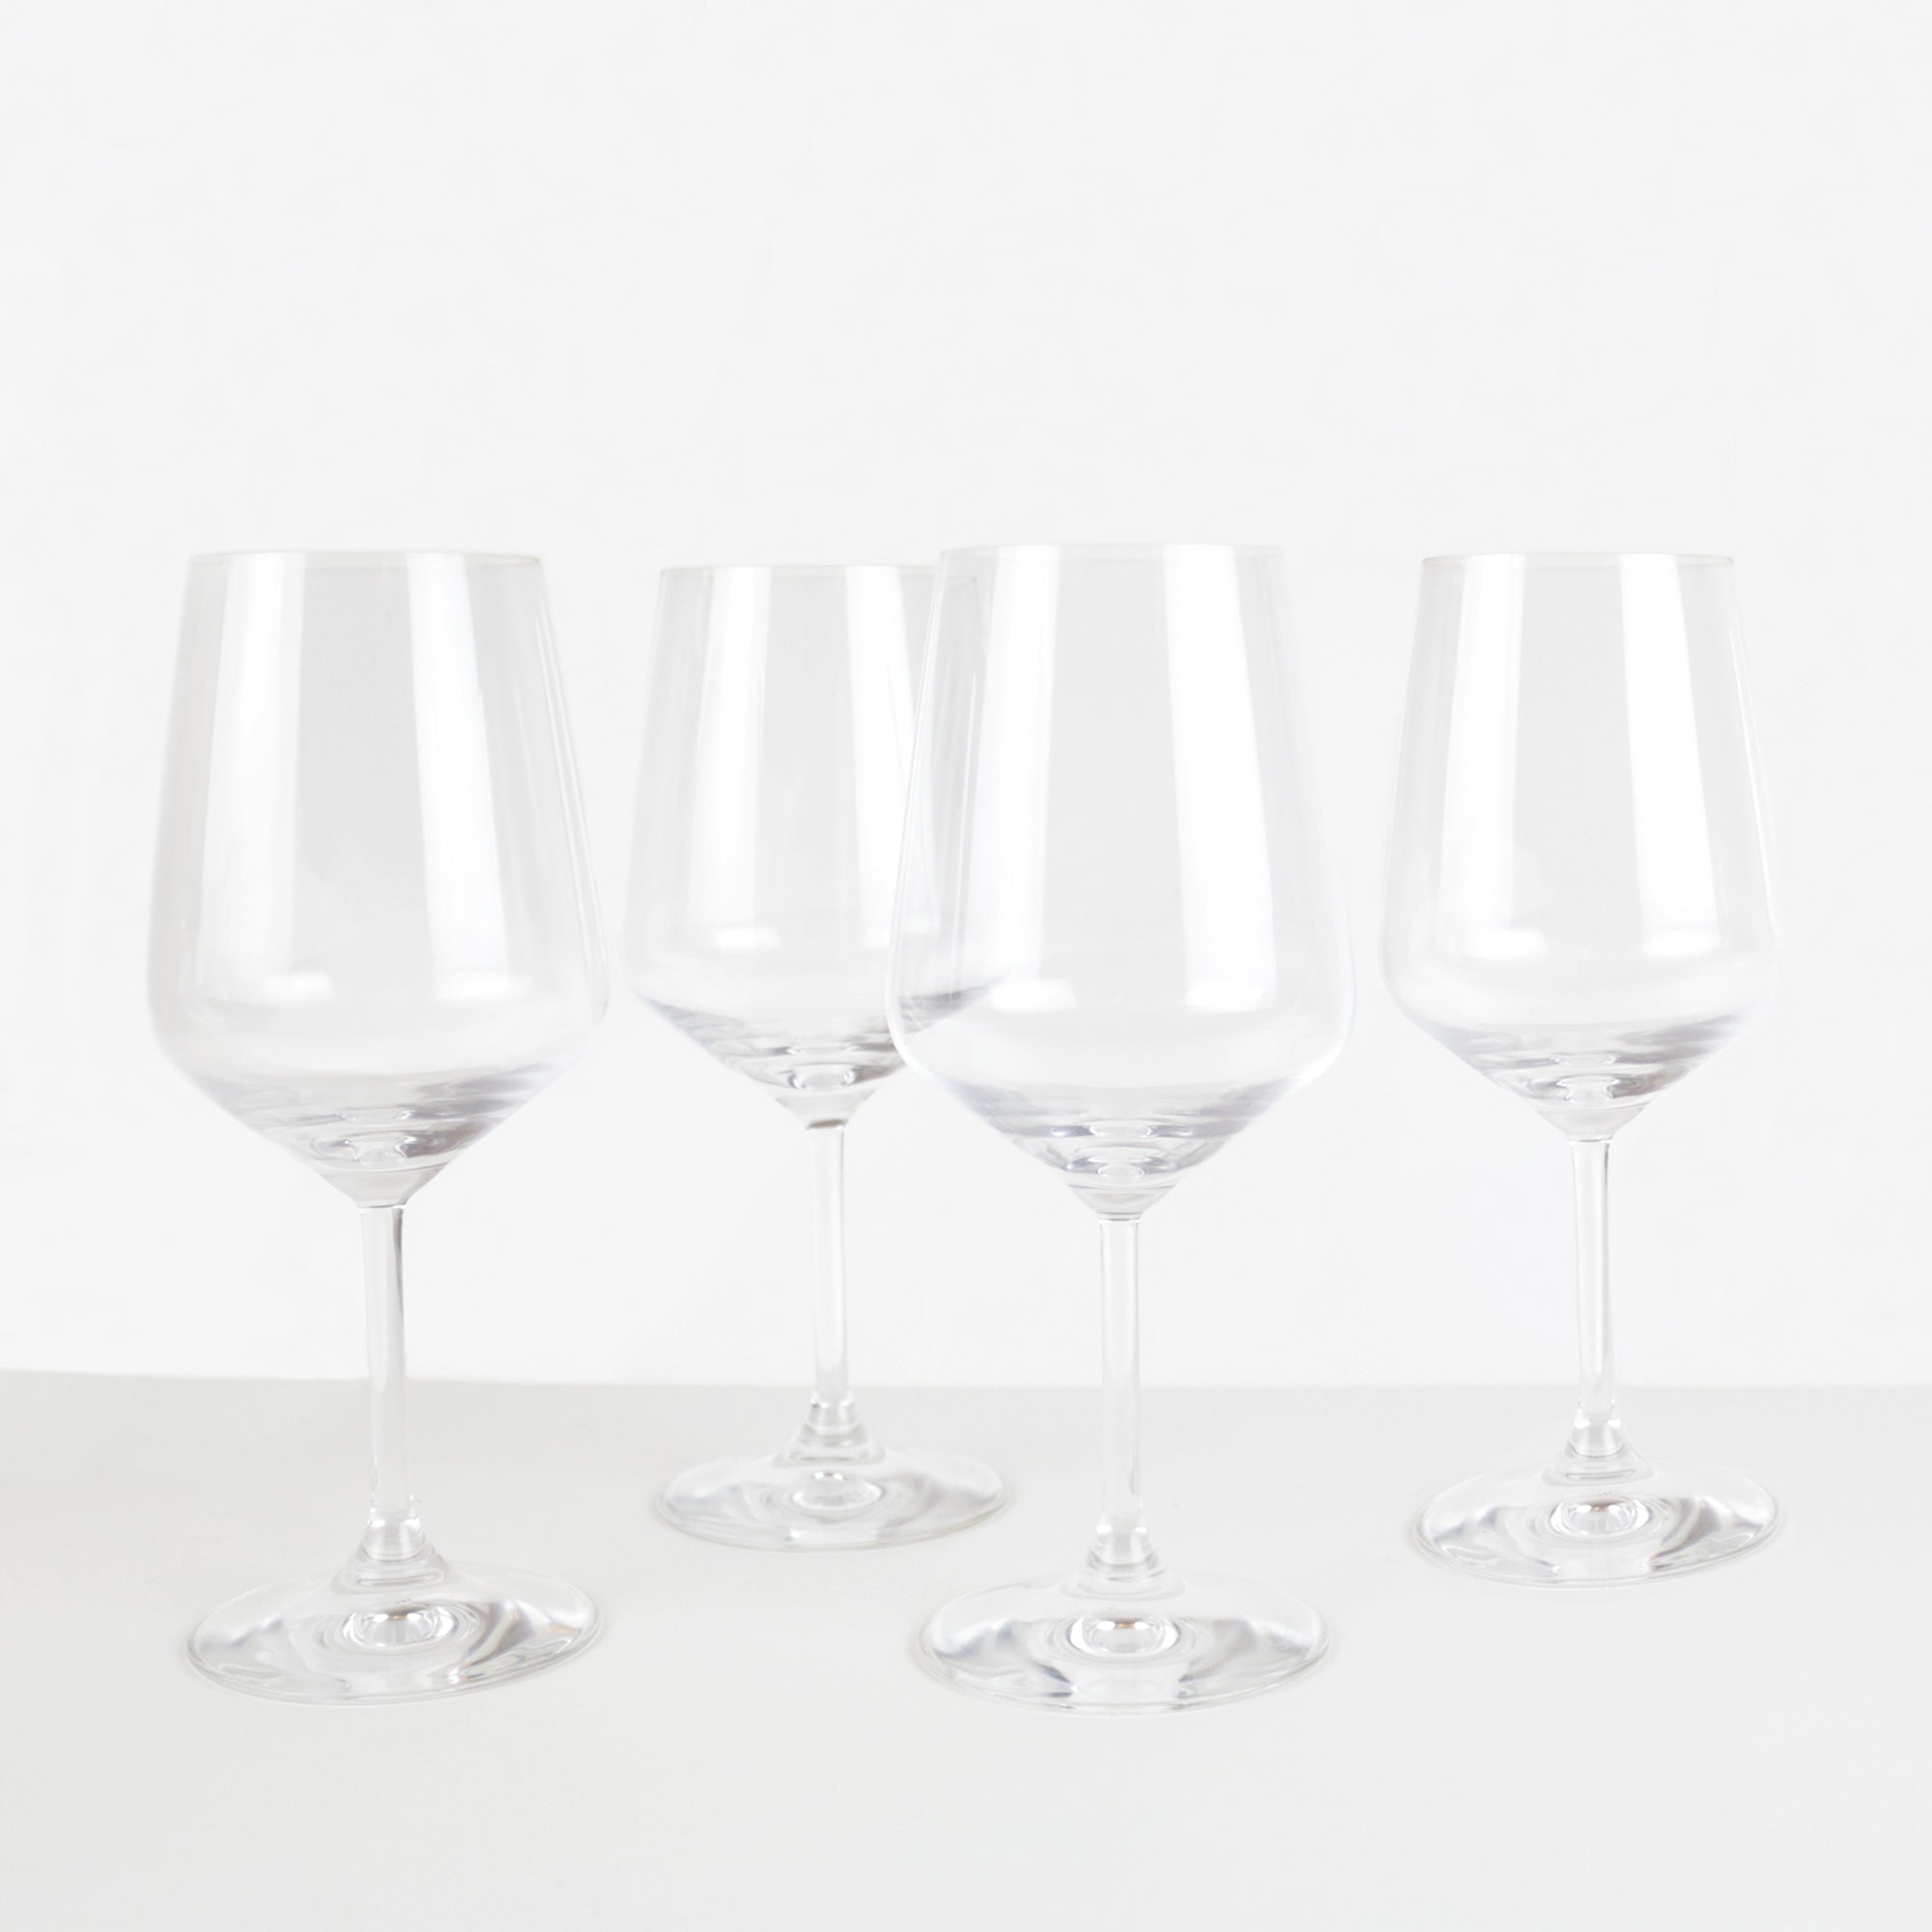 Spiegelau Definition Universal European-Made Crystal Wine Glasses Gift Set